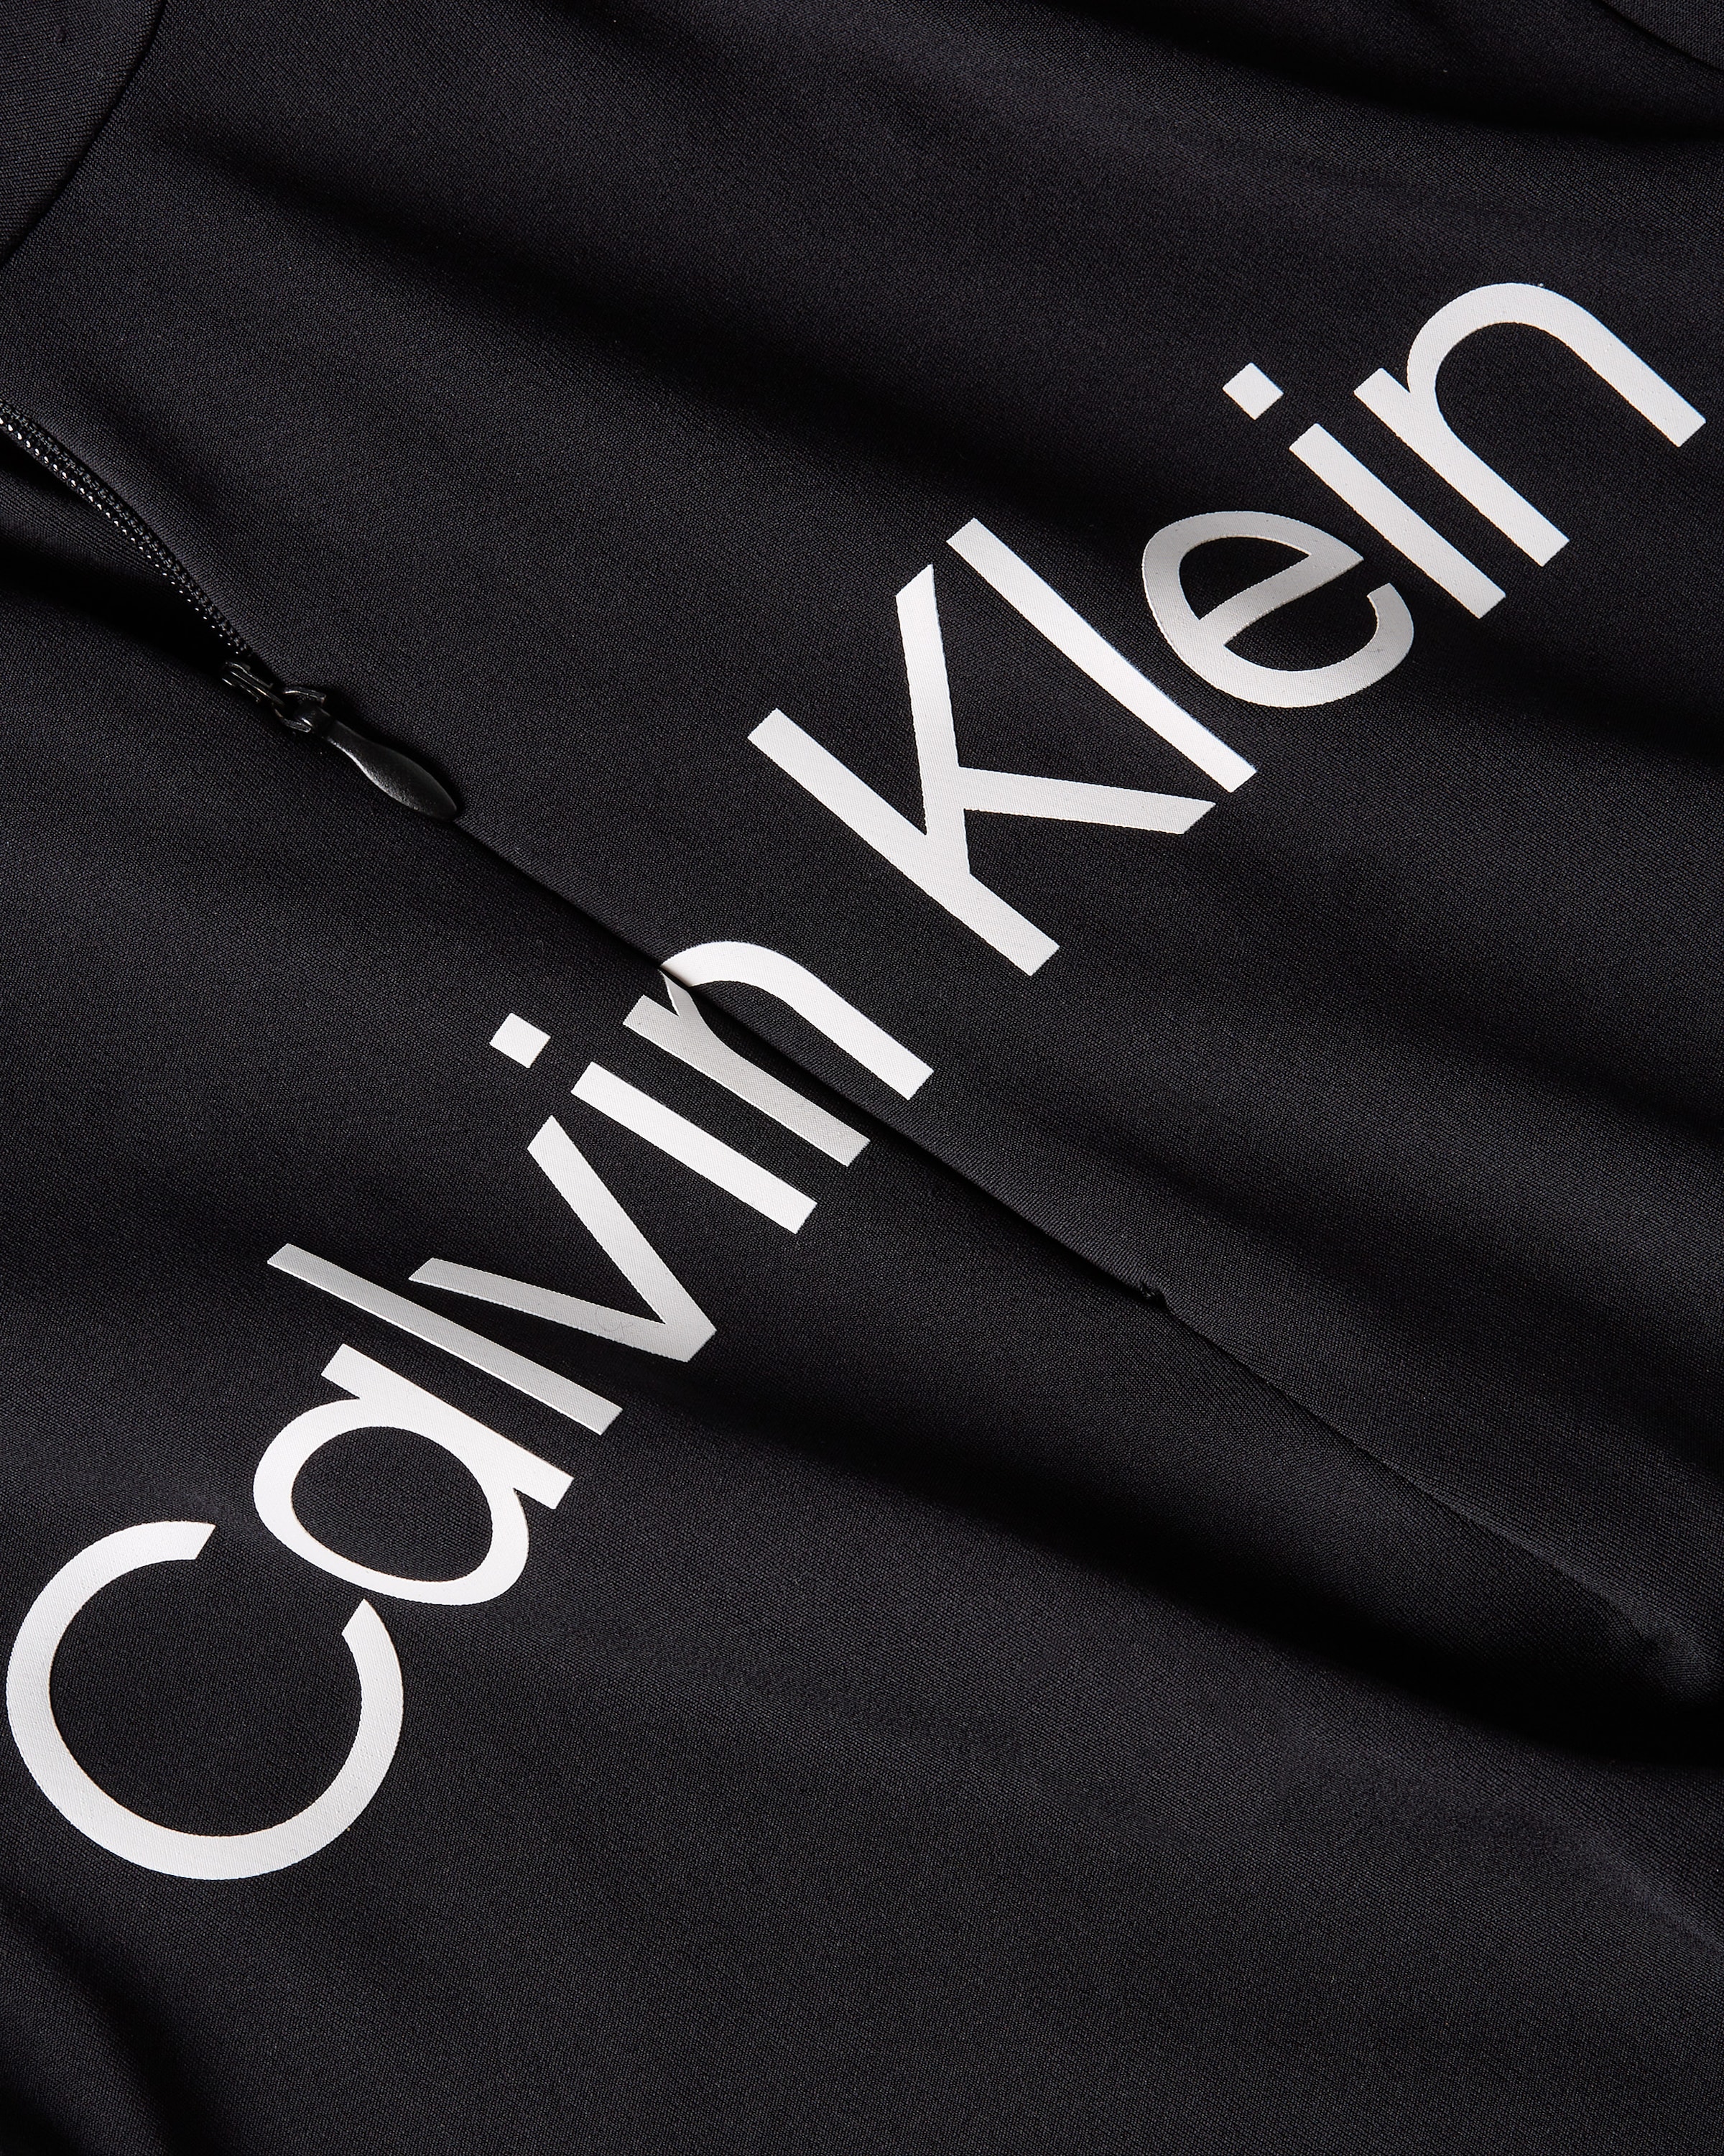 Calvin Klein Sport Langarmshirt »WO - LS Top«